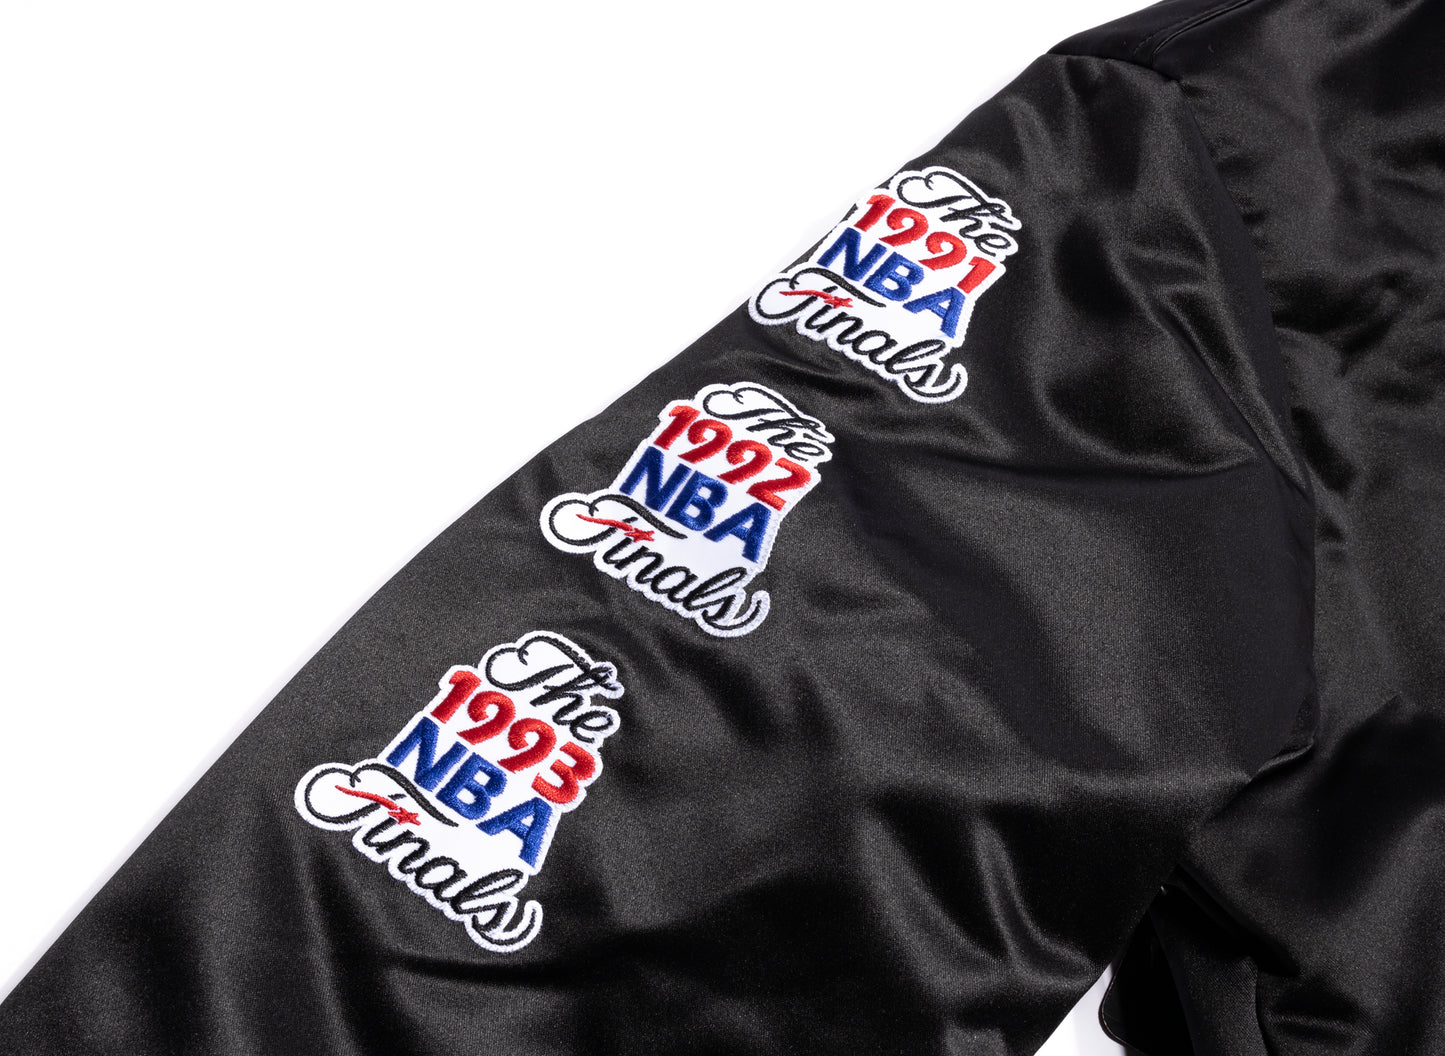 Mitchell & Ness NBA Champ City Satin Bulls Jacket